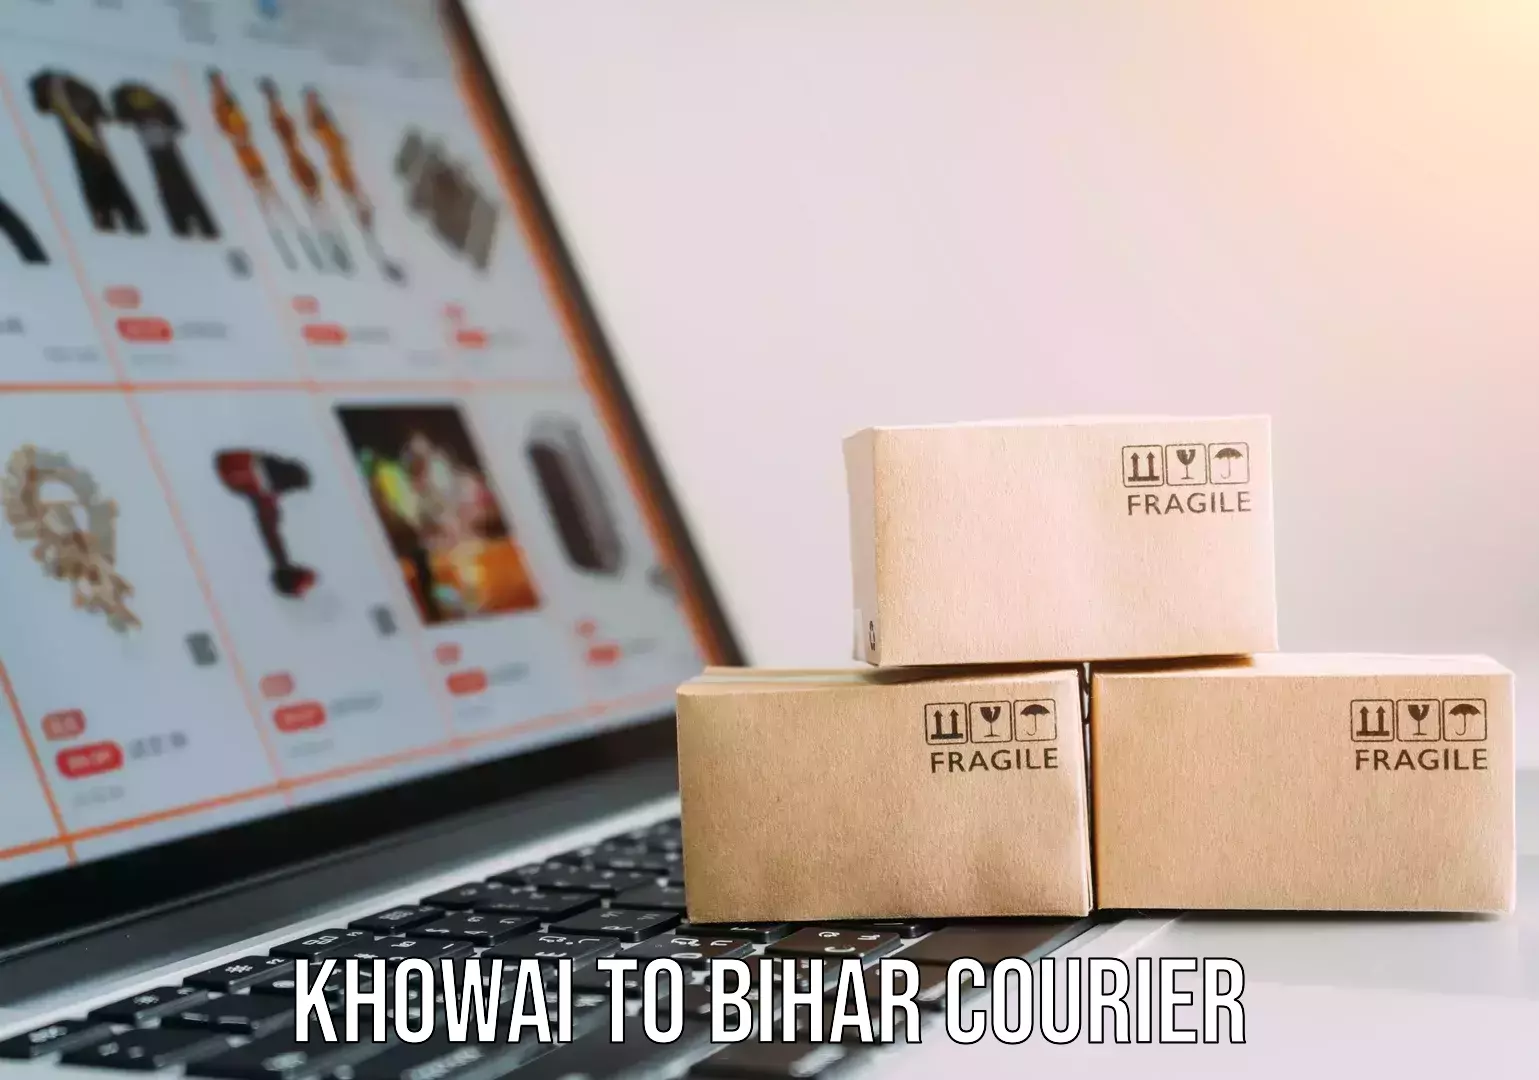 Courier service partnerships Khowai to Bihar